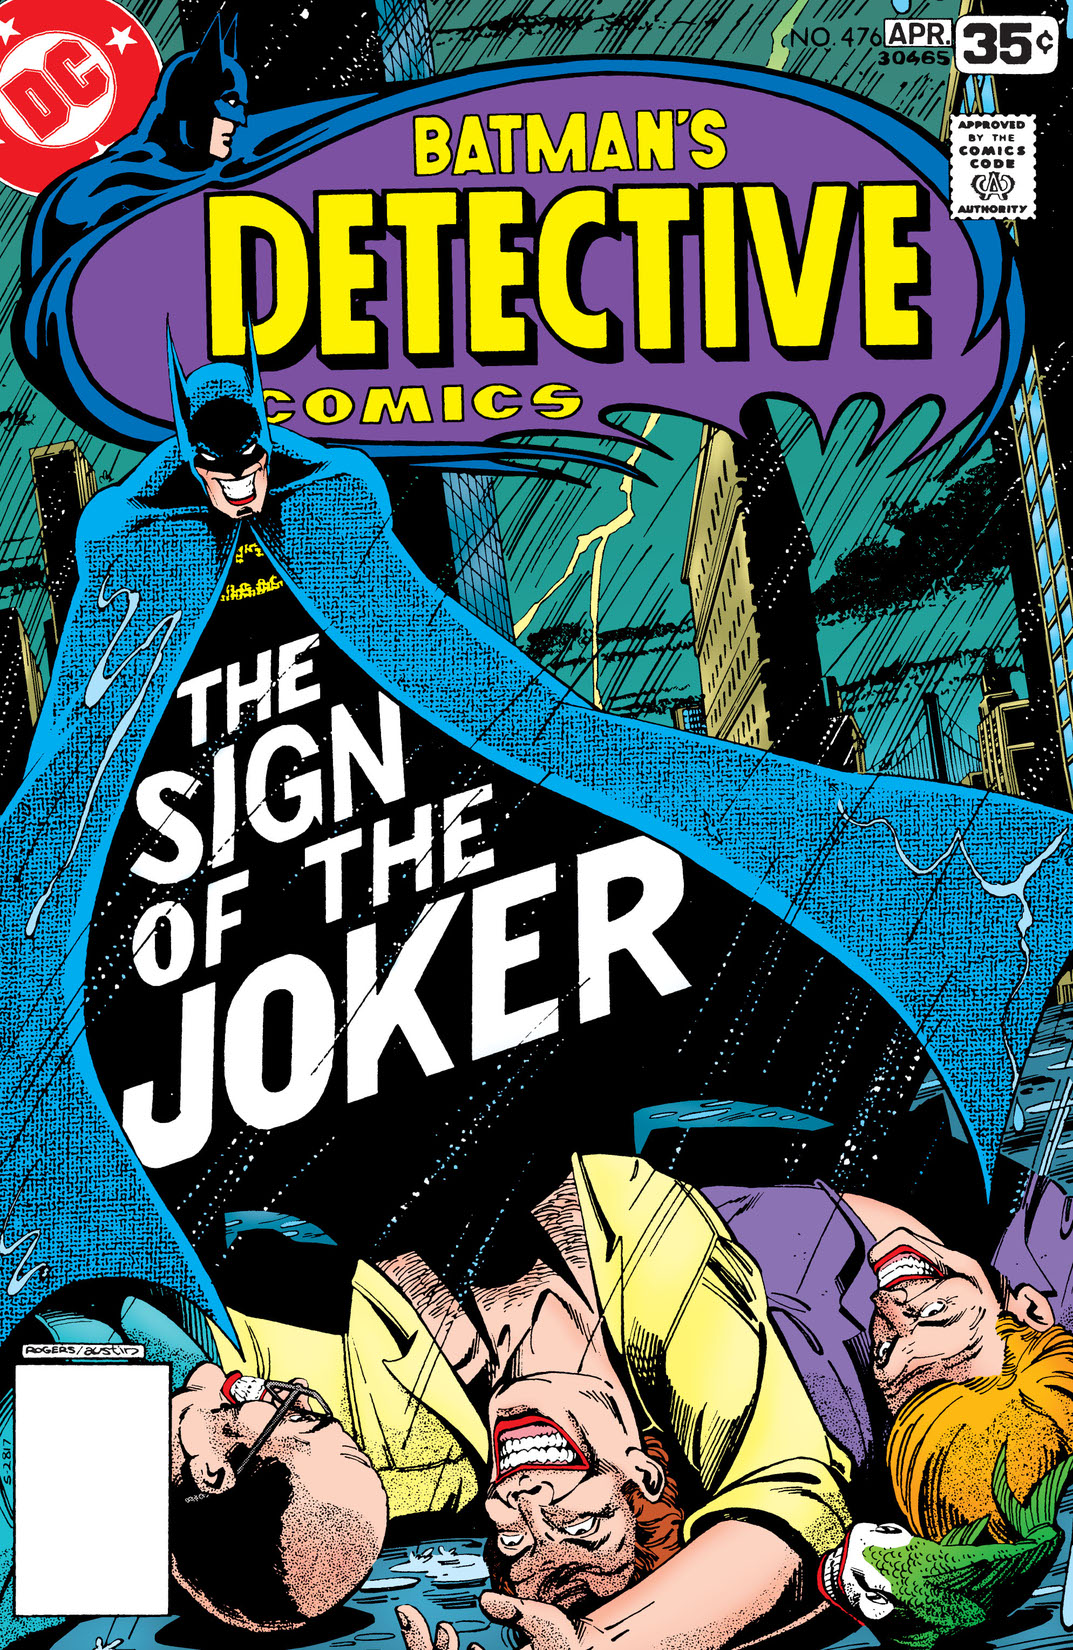 Detective Comics (1937-) #476 preview images